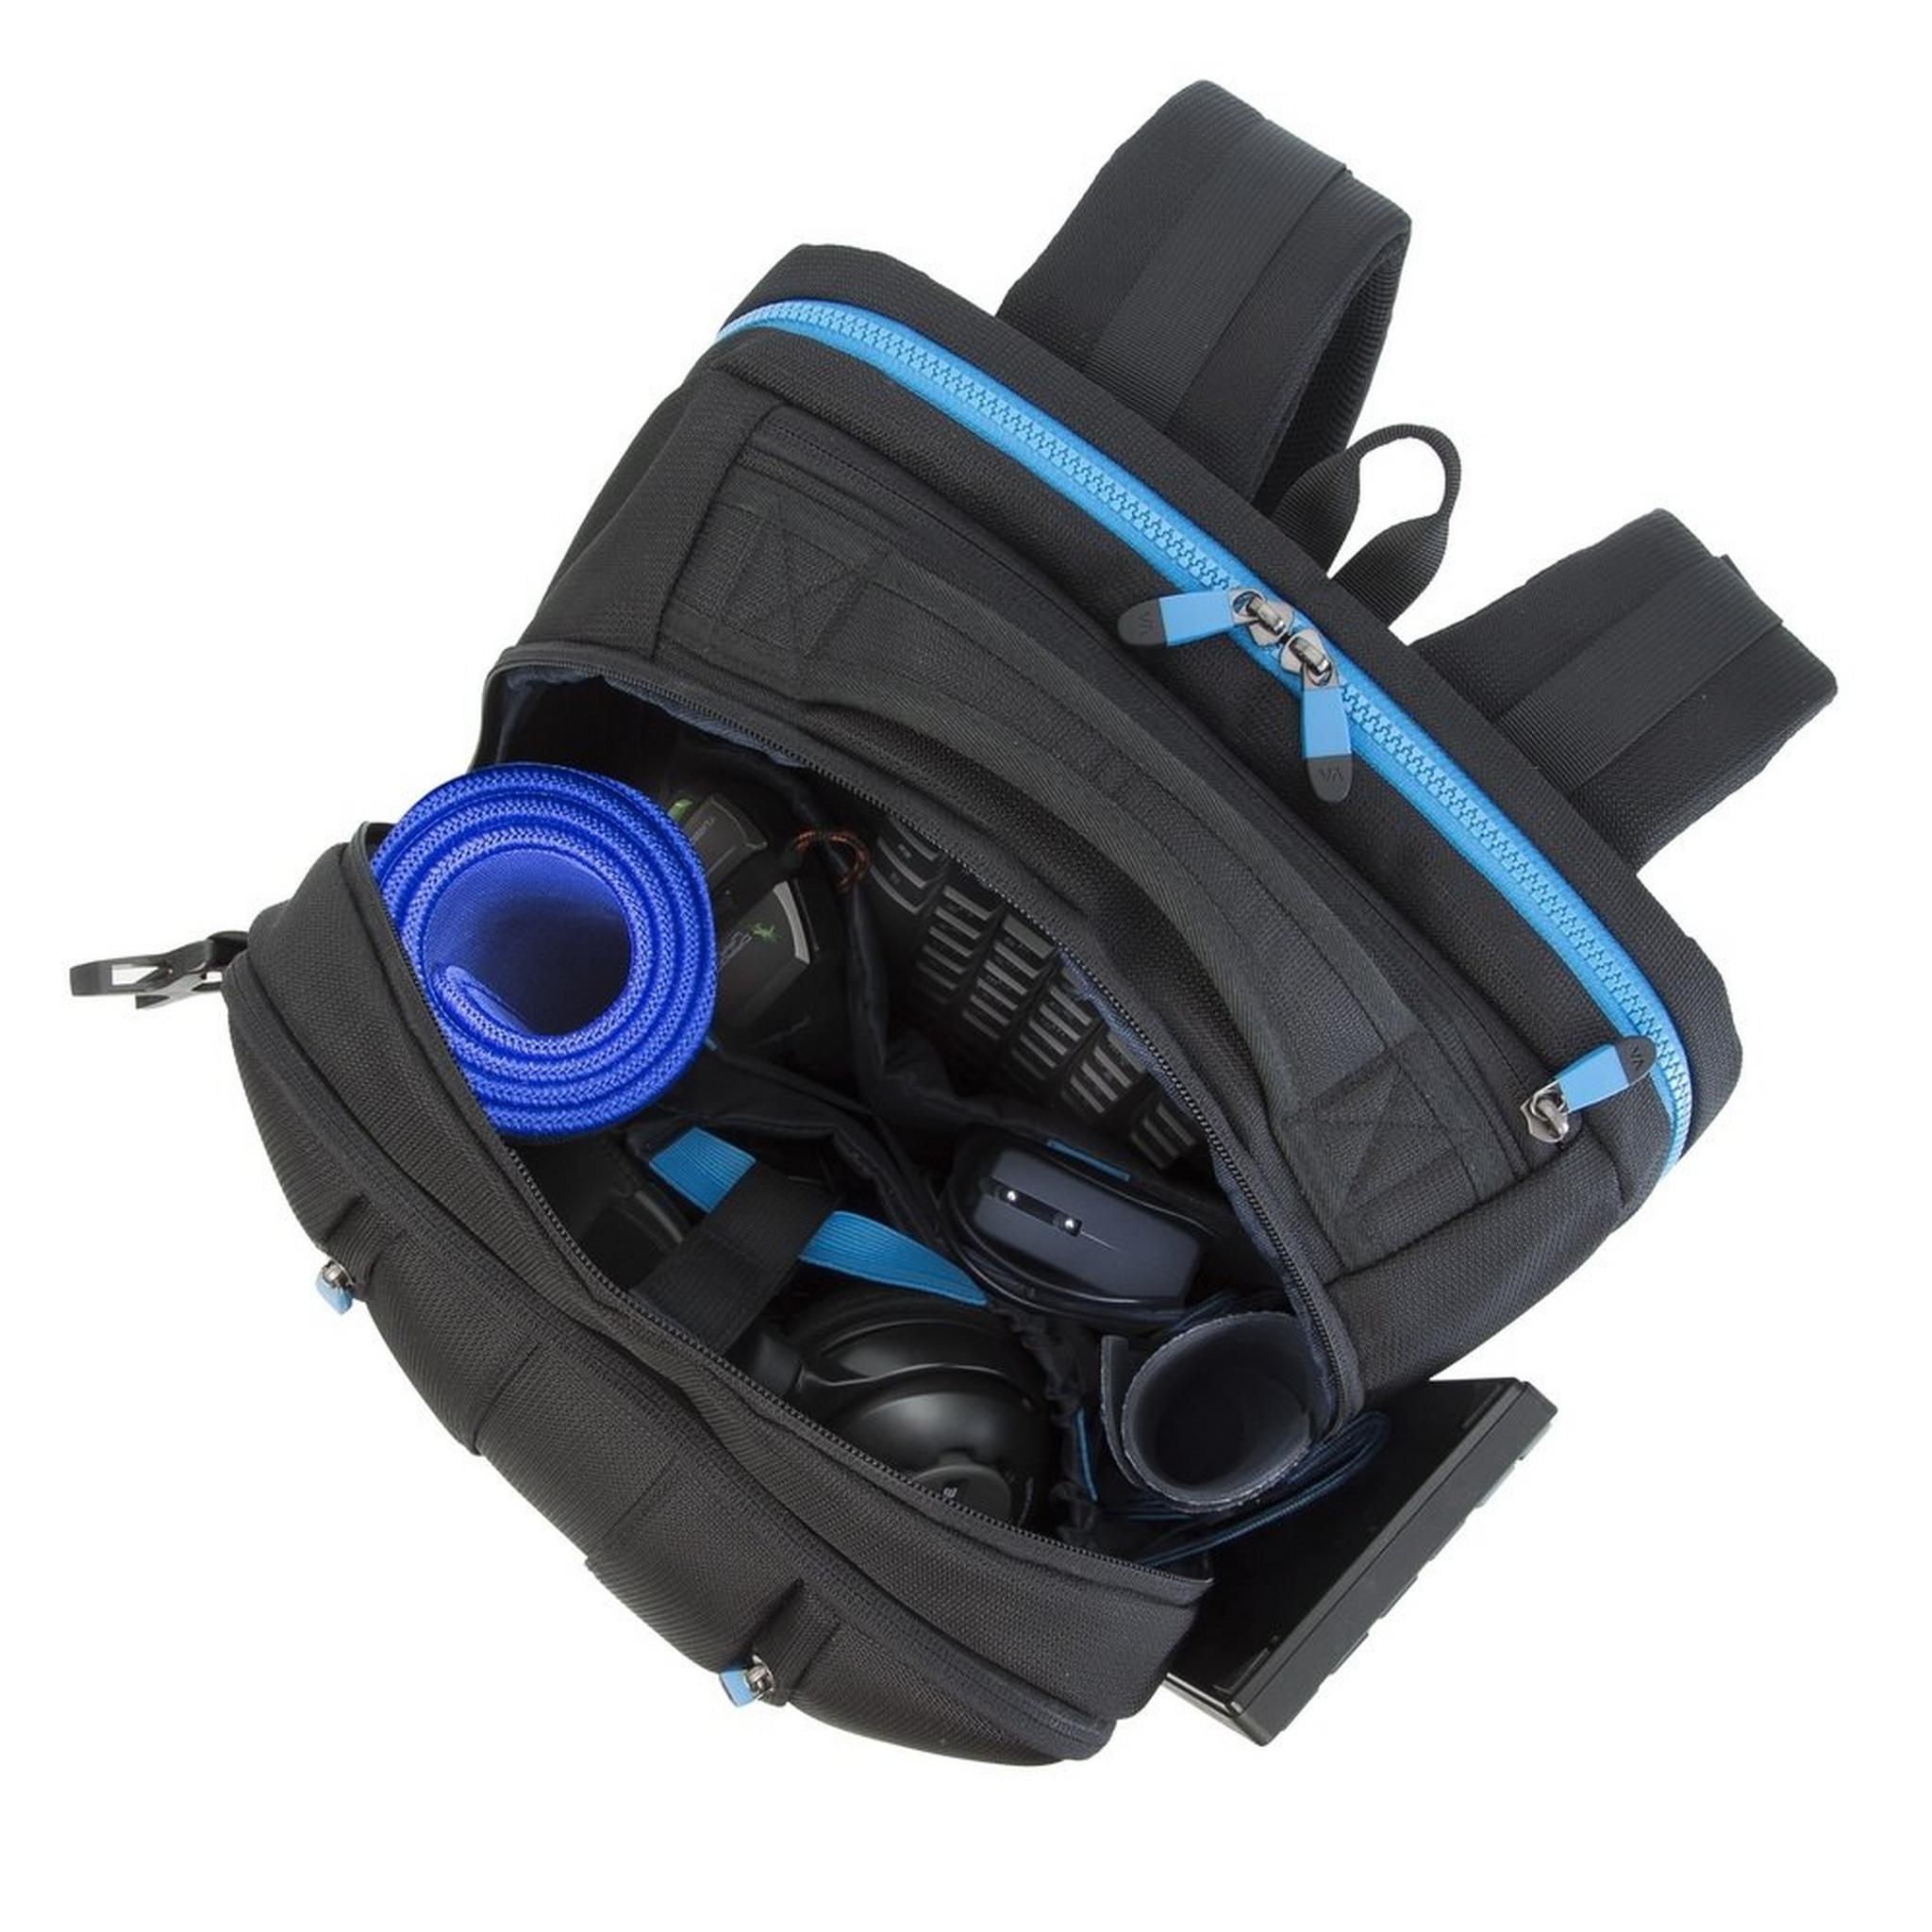 Riva Gaming backpack 17.3-inch - Black